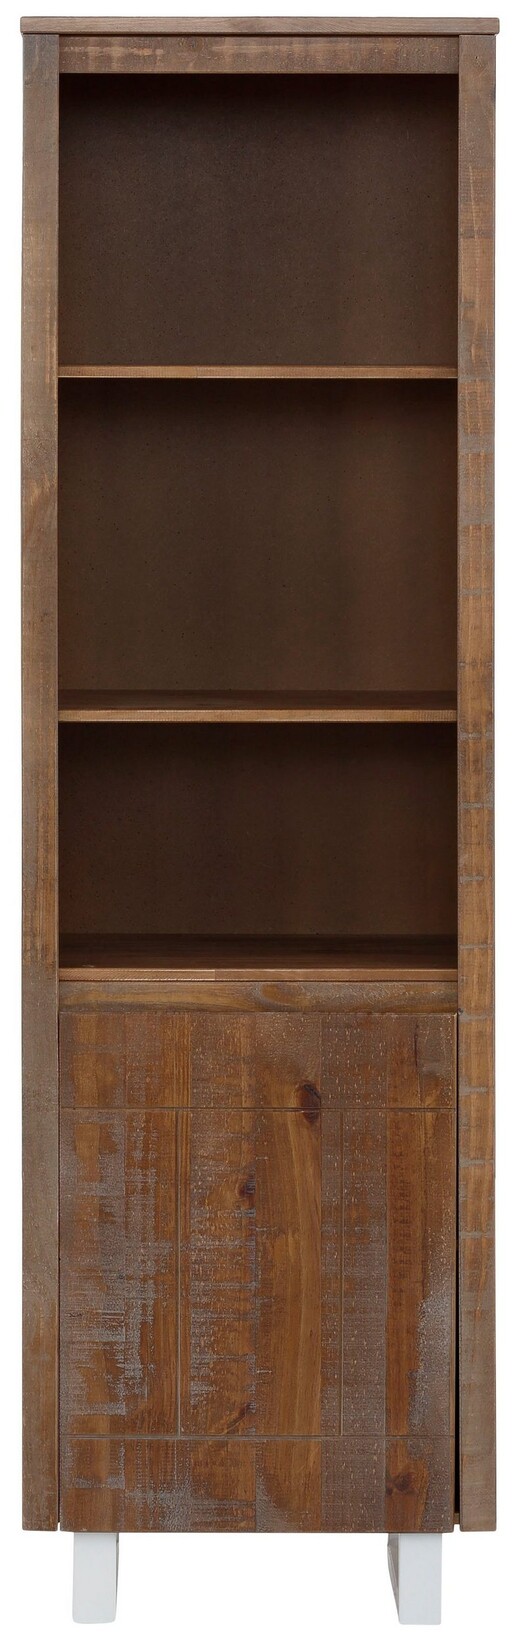 1-trg. Bücherregal LEANO aus Kiefer massiv, 180 cm hoch